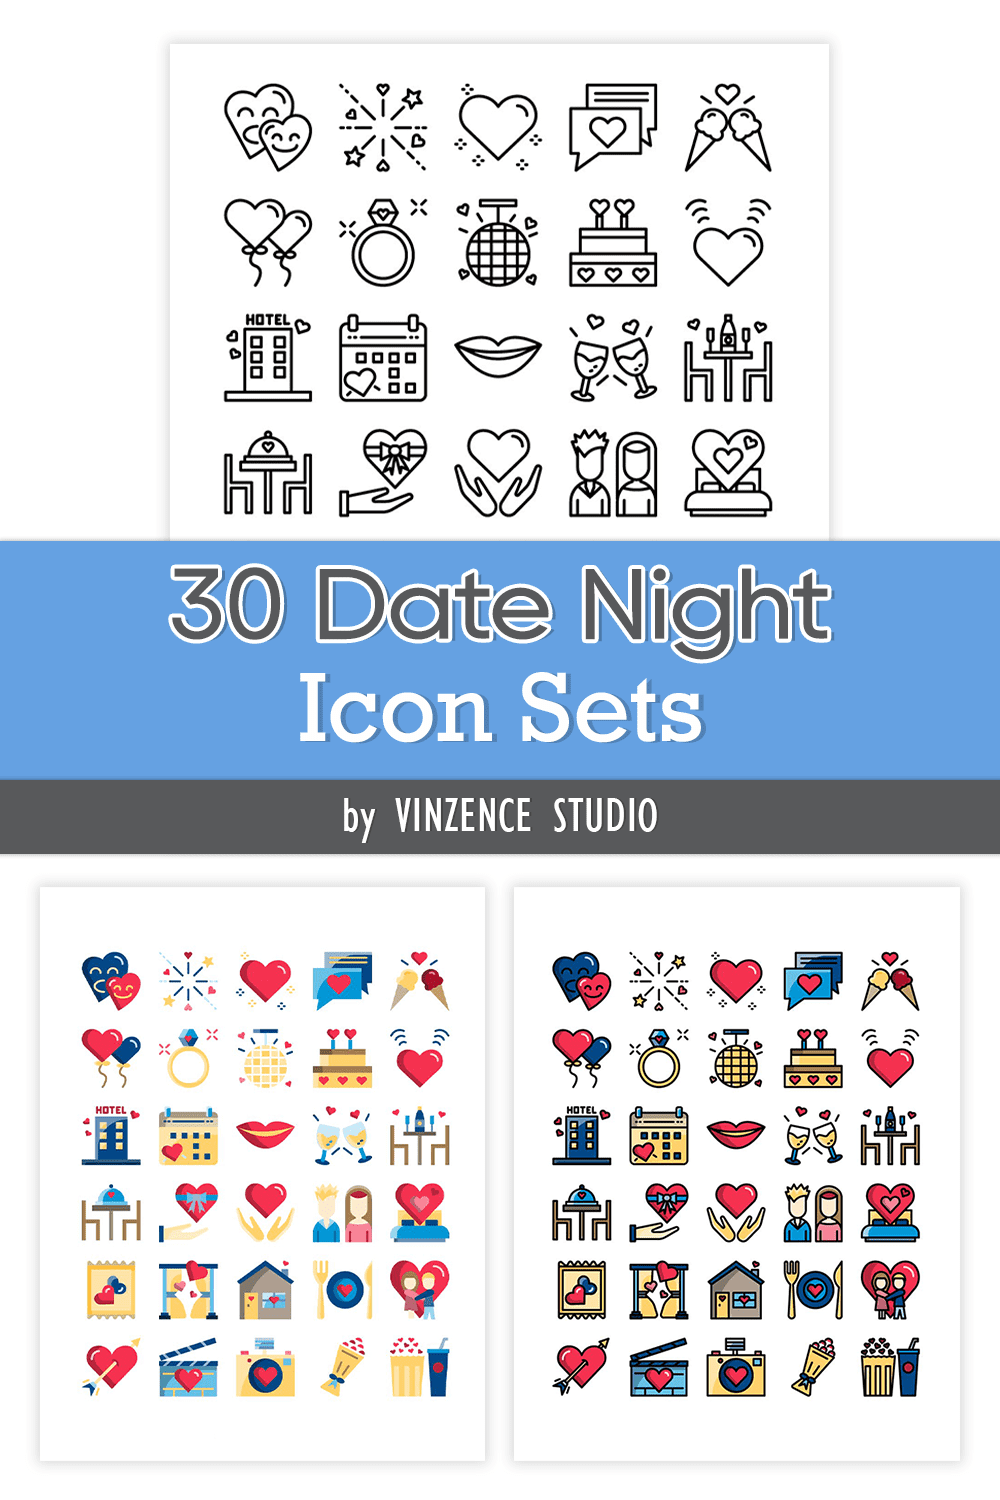 30 Date Night Icon Sets - Pinterest.